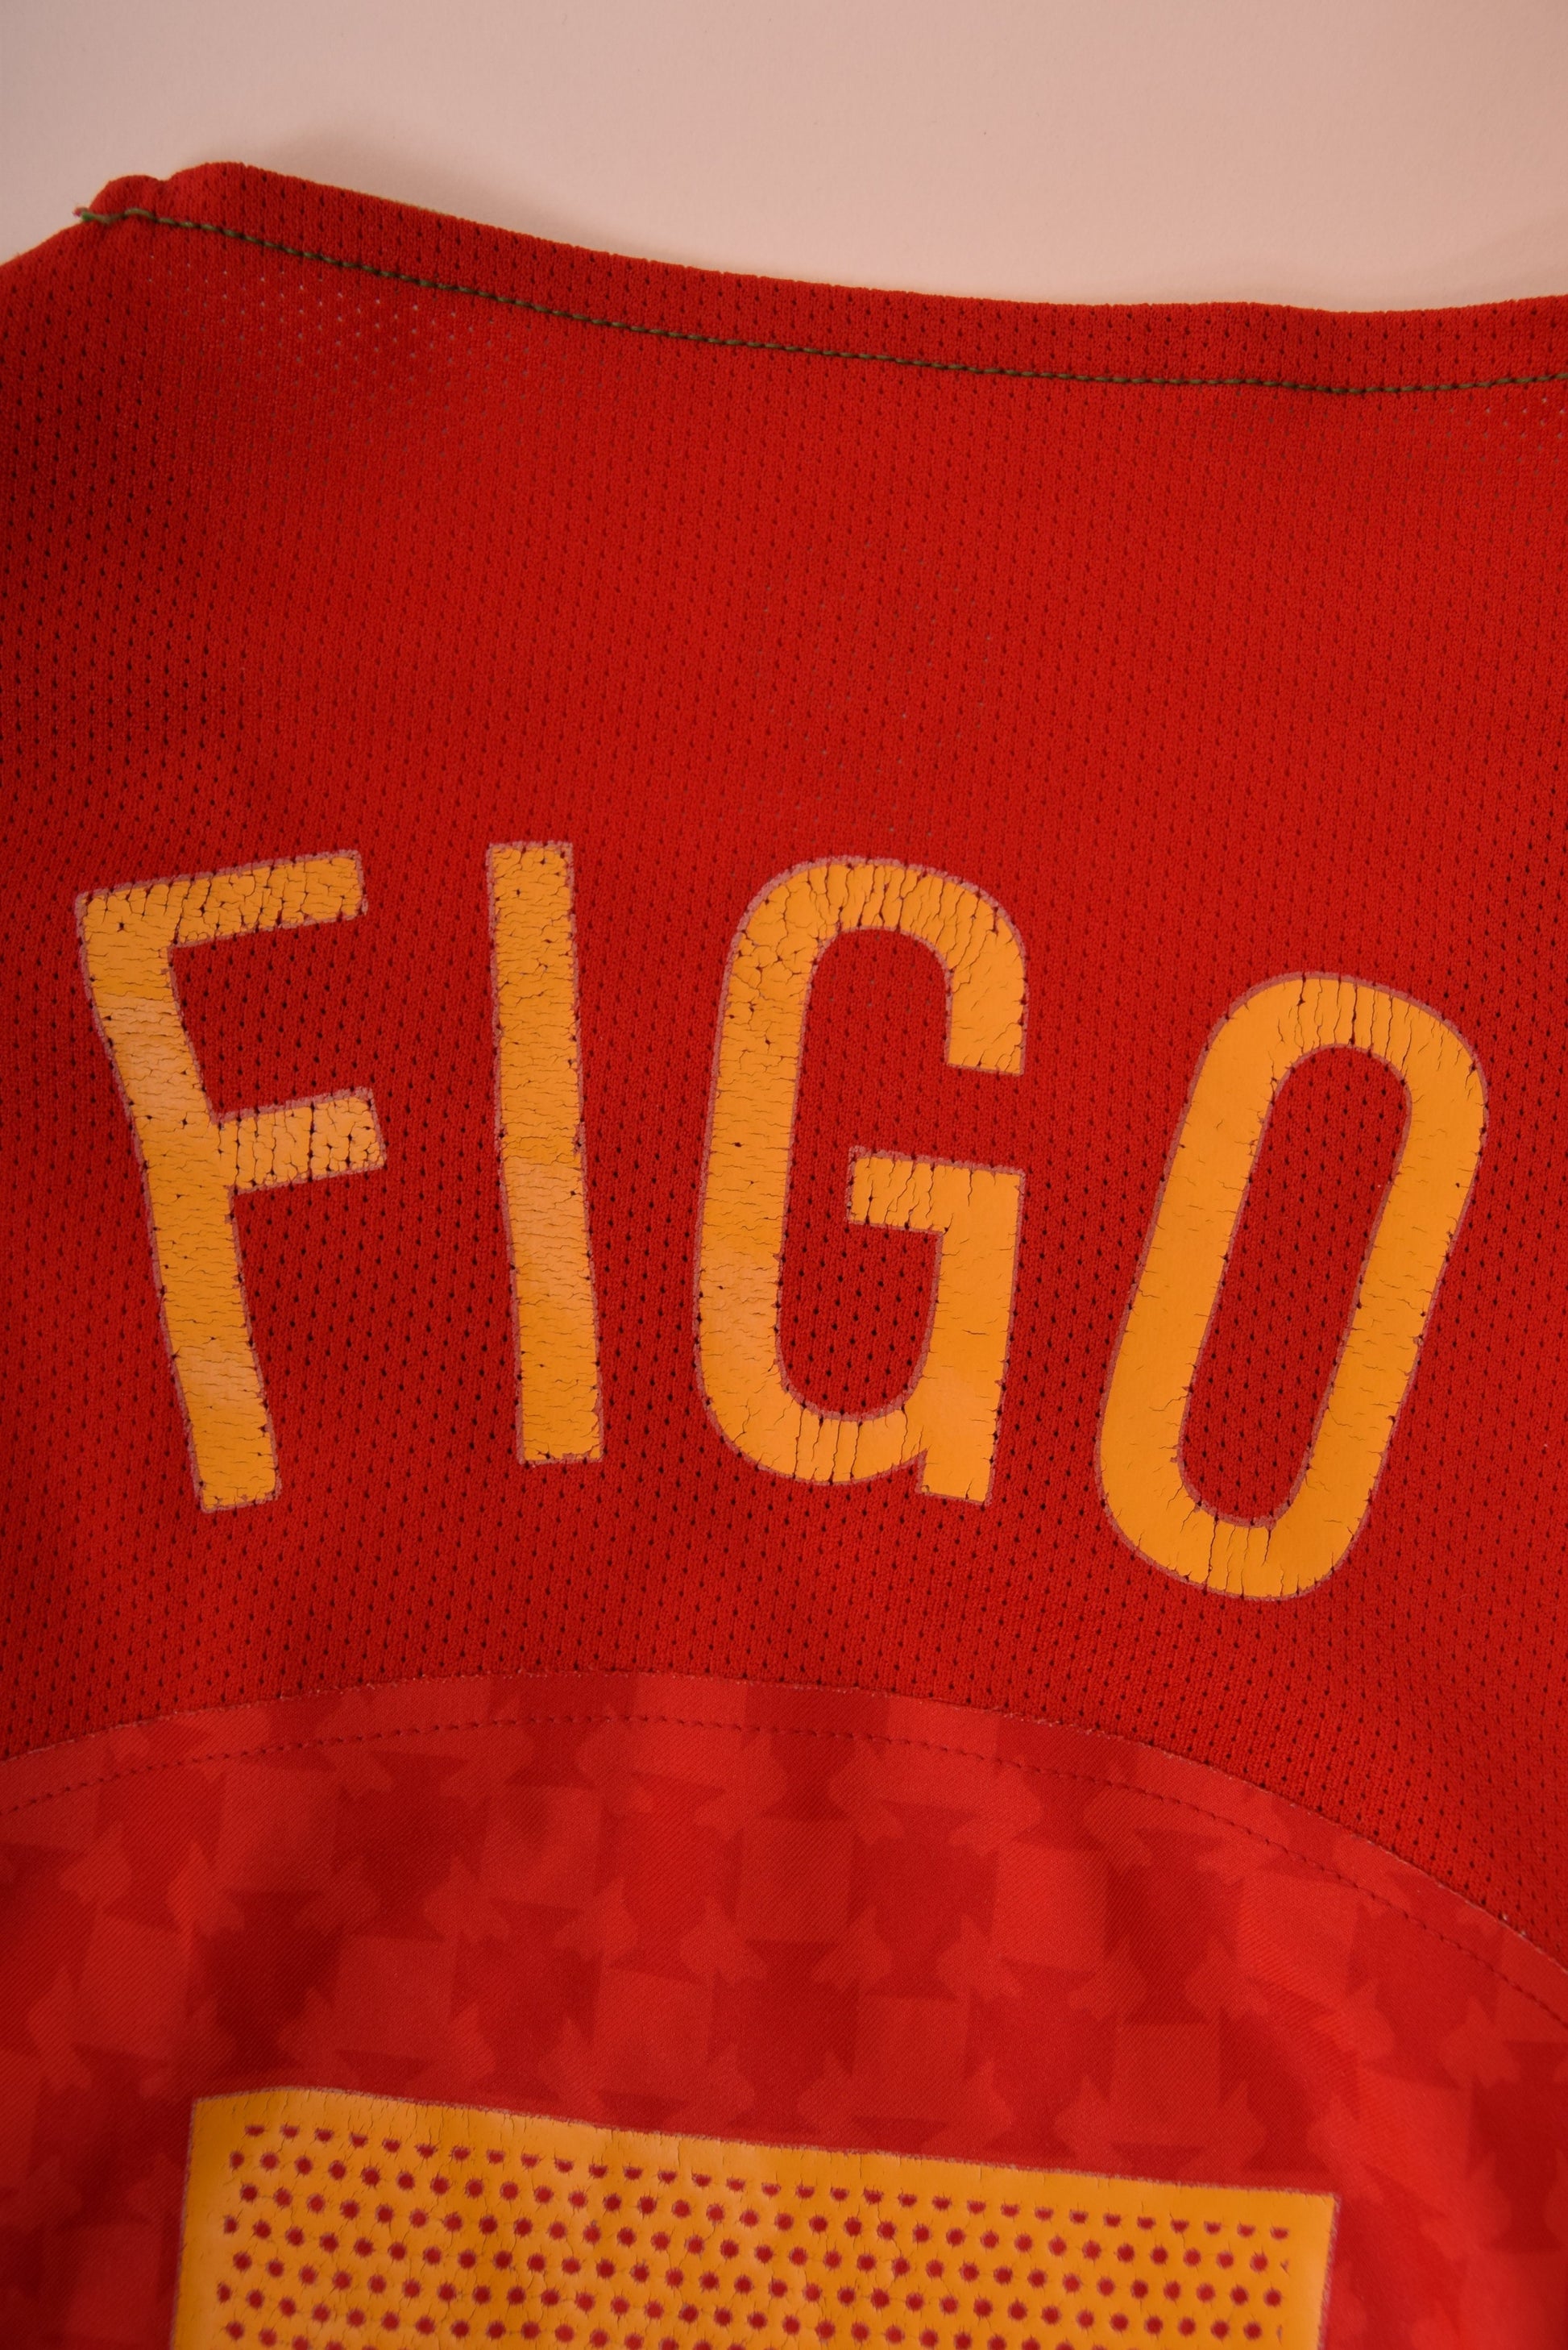 Portugal Figo Nike 2004-2005 #7 Home Football Shirt Size L Limited Edition